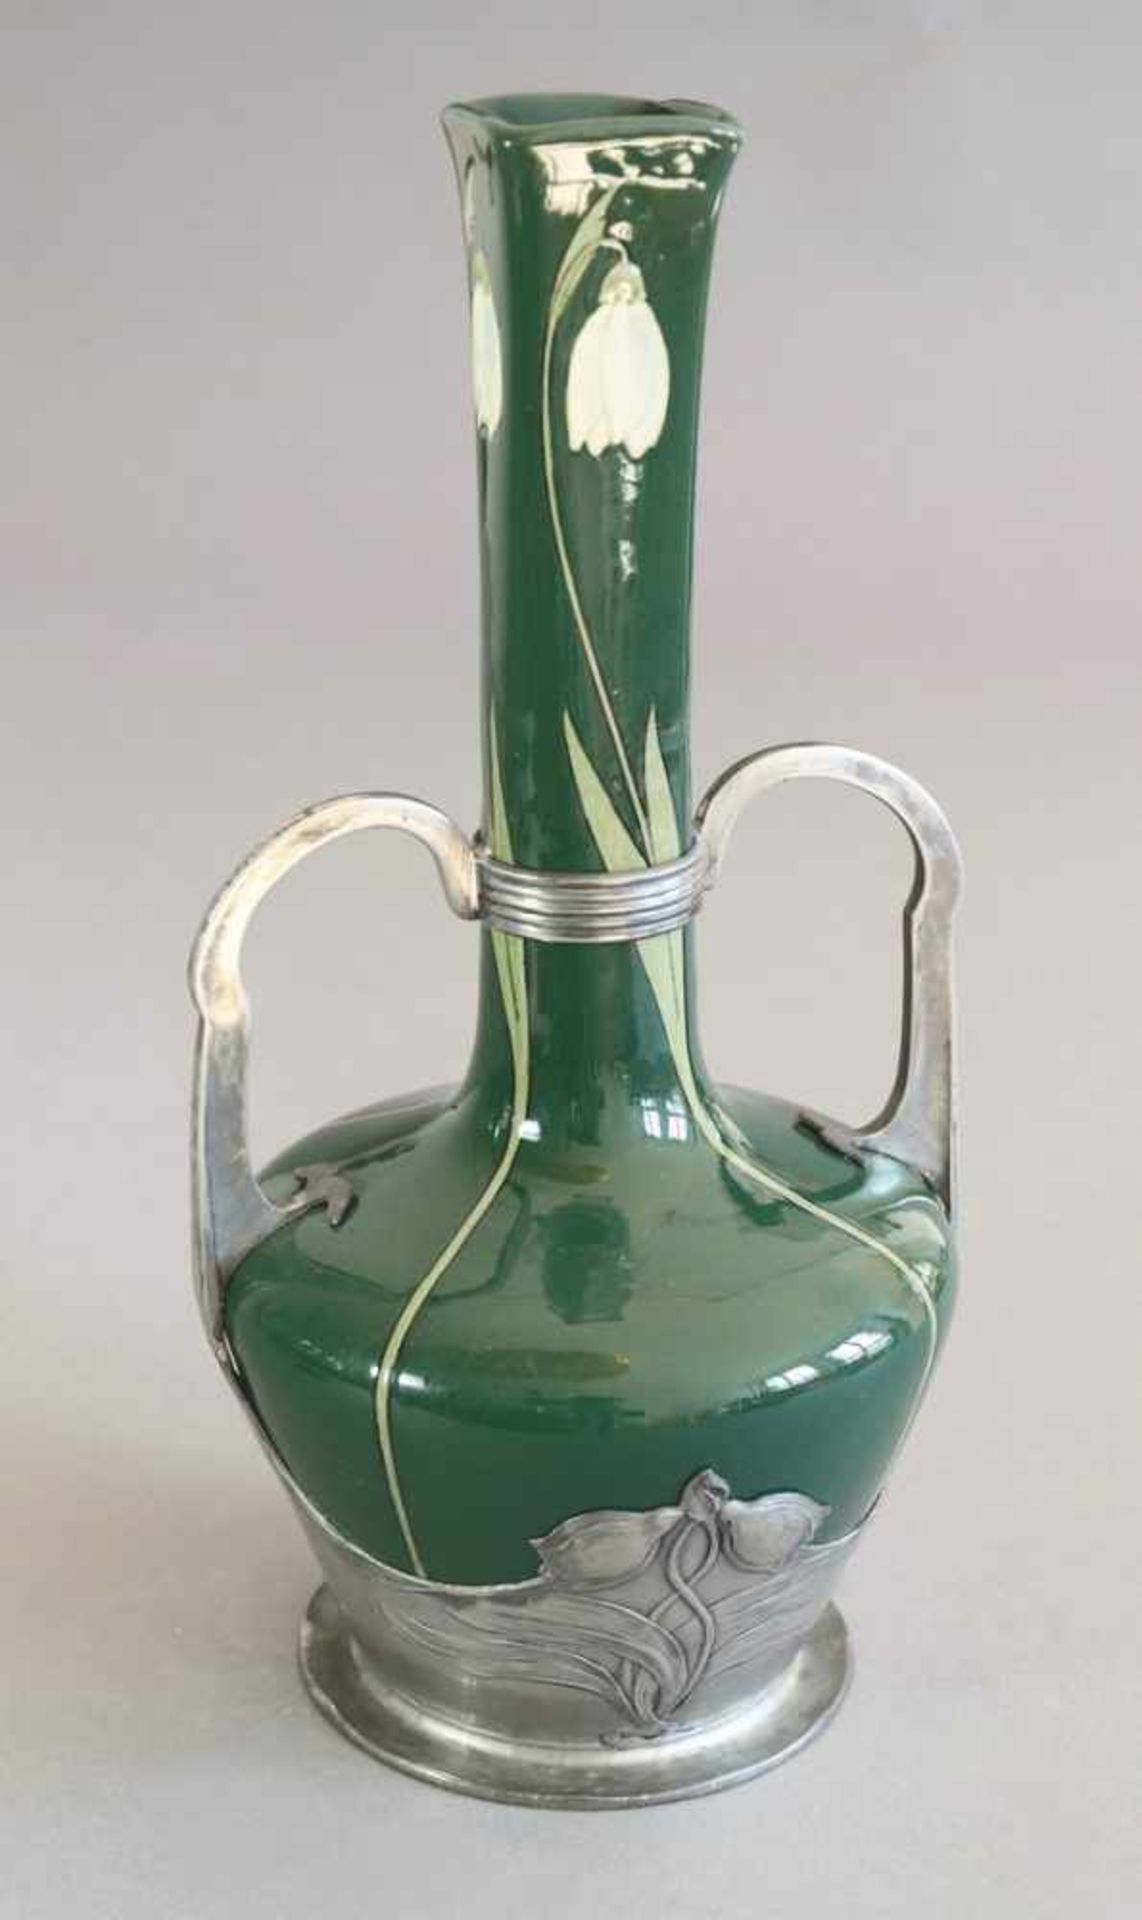 Orivit A.G., KölnAbout 1900Vase. Um 1900. Zinn, Keramik. Keramikkorpus mit Bemalung aus hellen